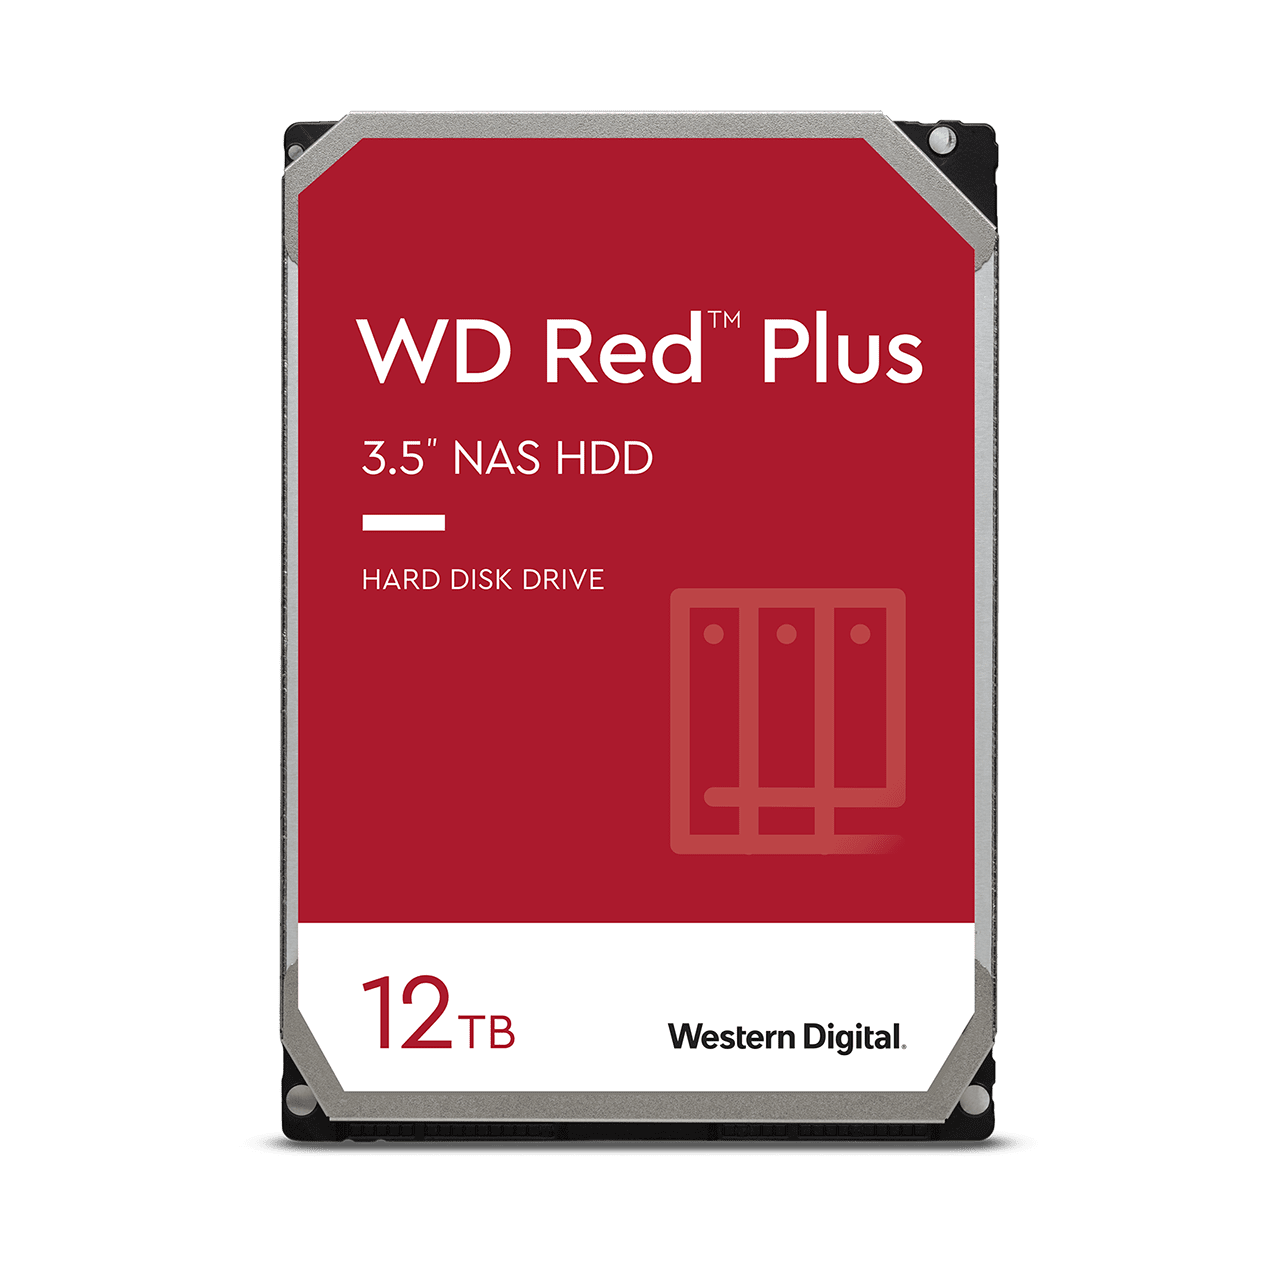 Western Digital WD Red™ Plus NAS Hard Drive 3.5" Internal Drives